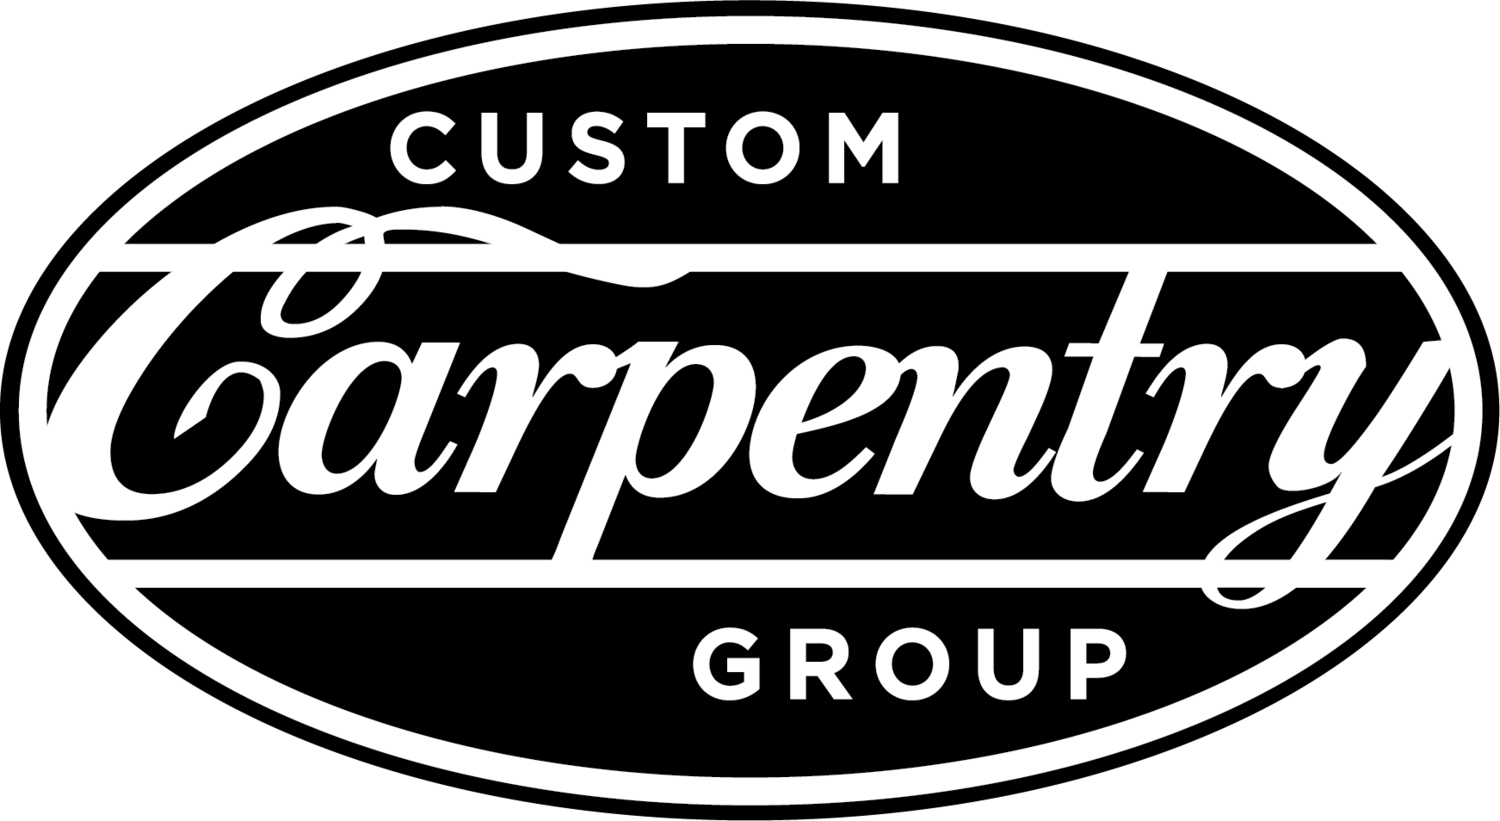 Custom Carpentry Group 